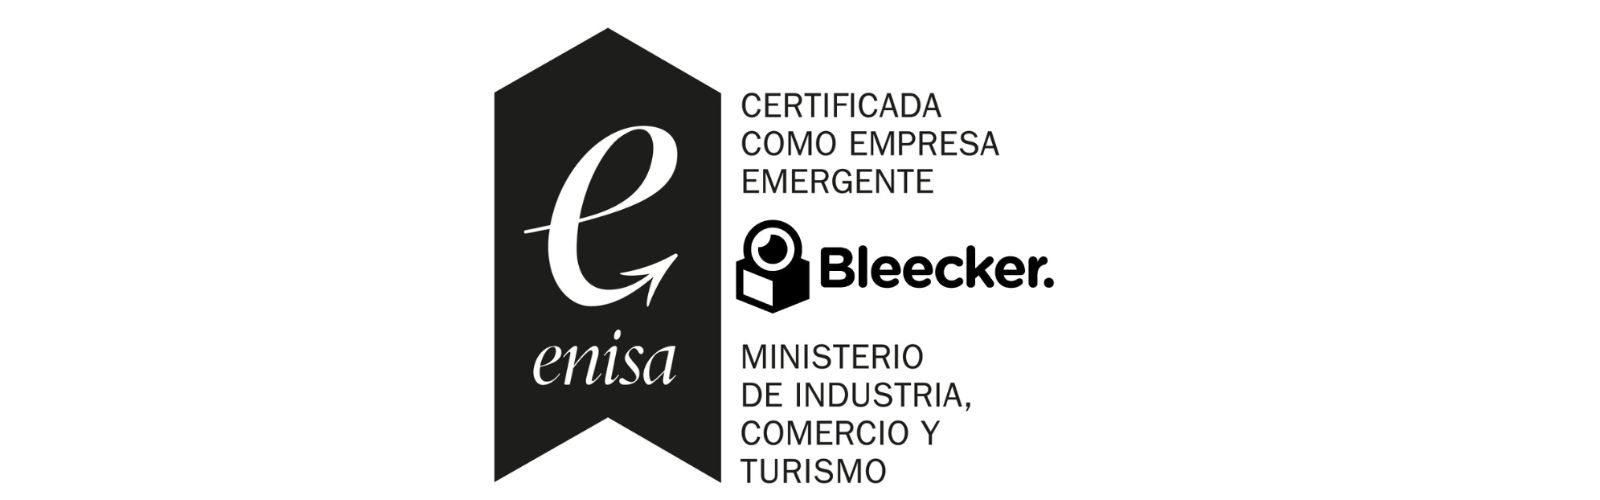 Nota de prensa - La EBT de la UMU Bleecker Technologies logra el certificado de “Empresa Emergente”